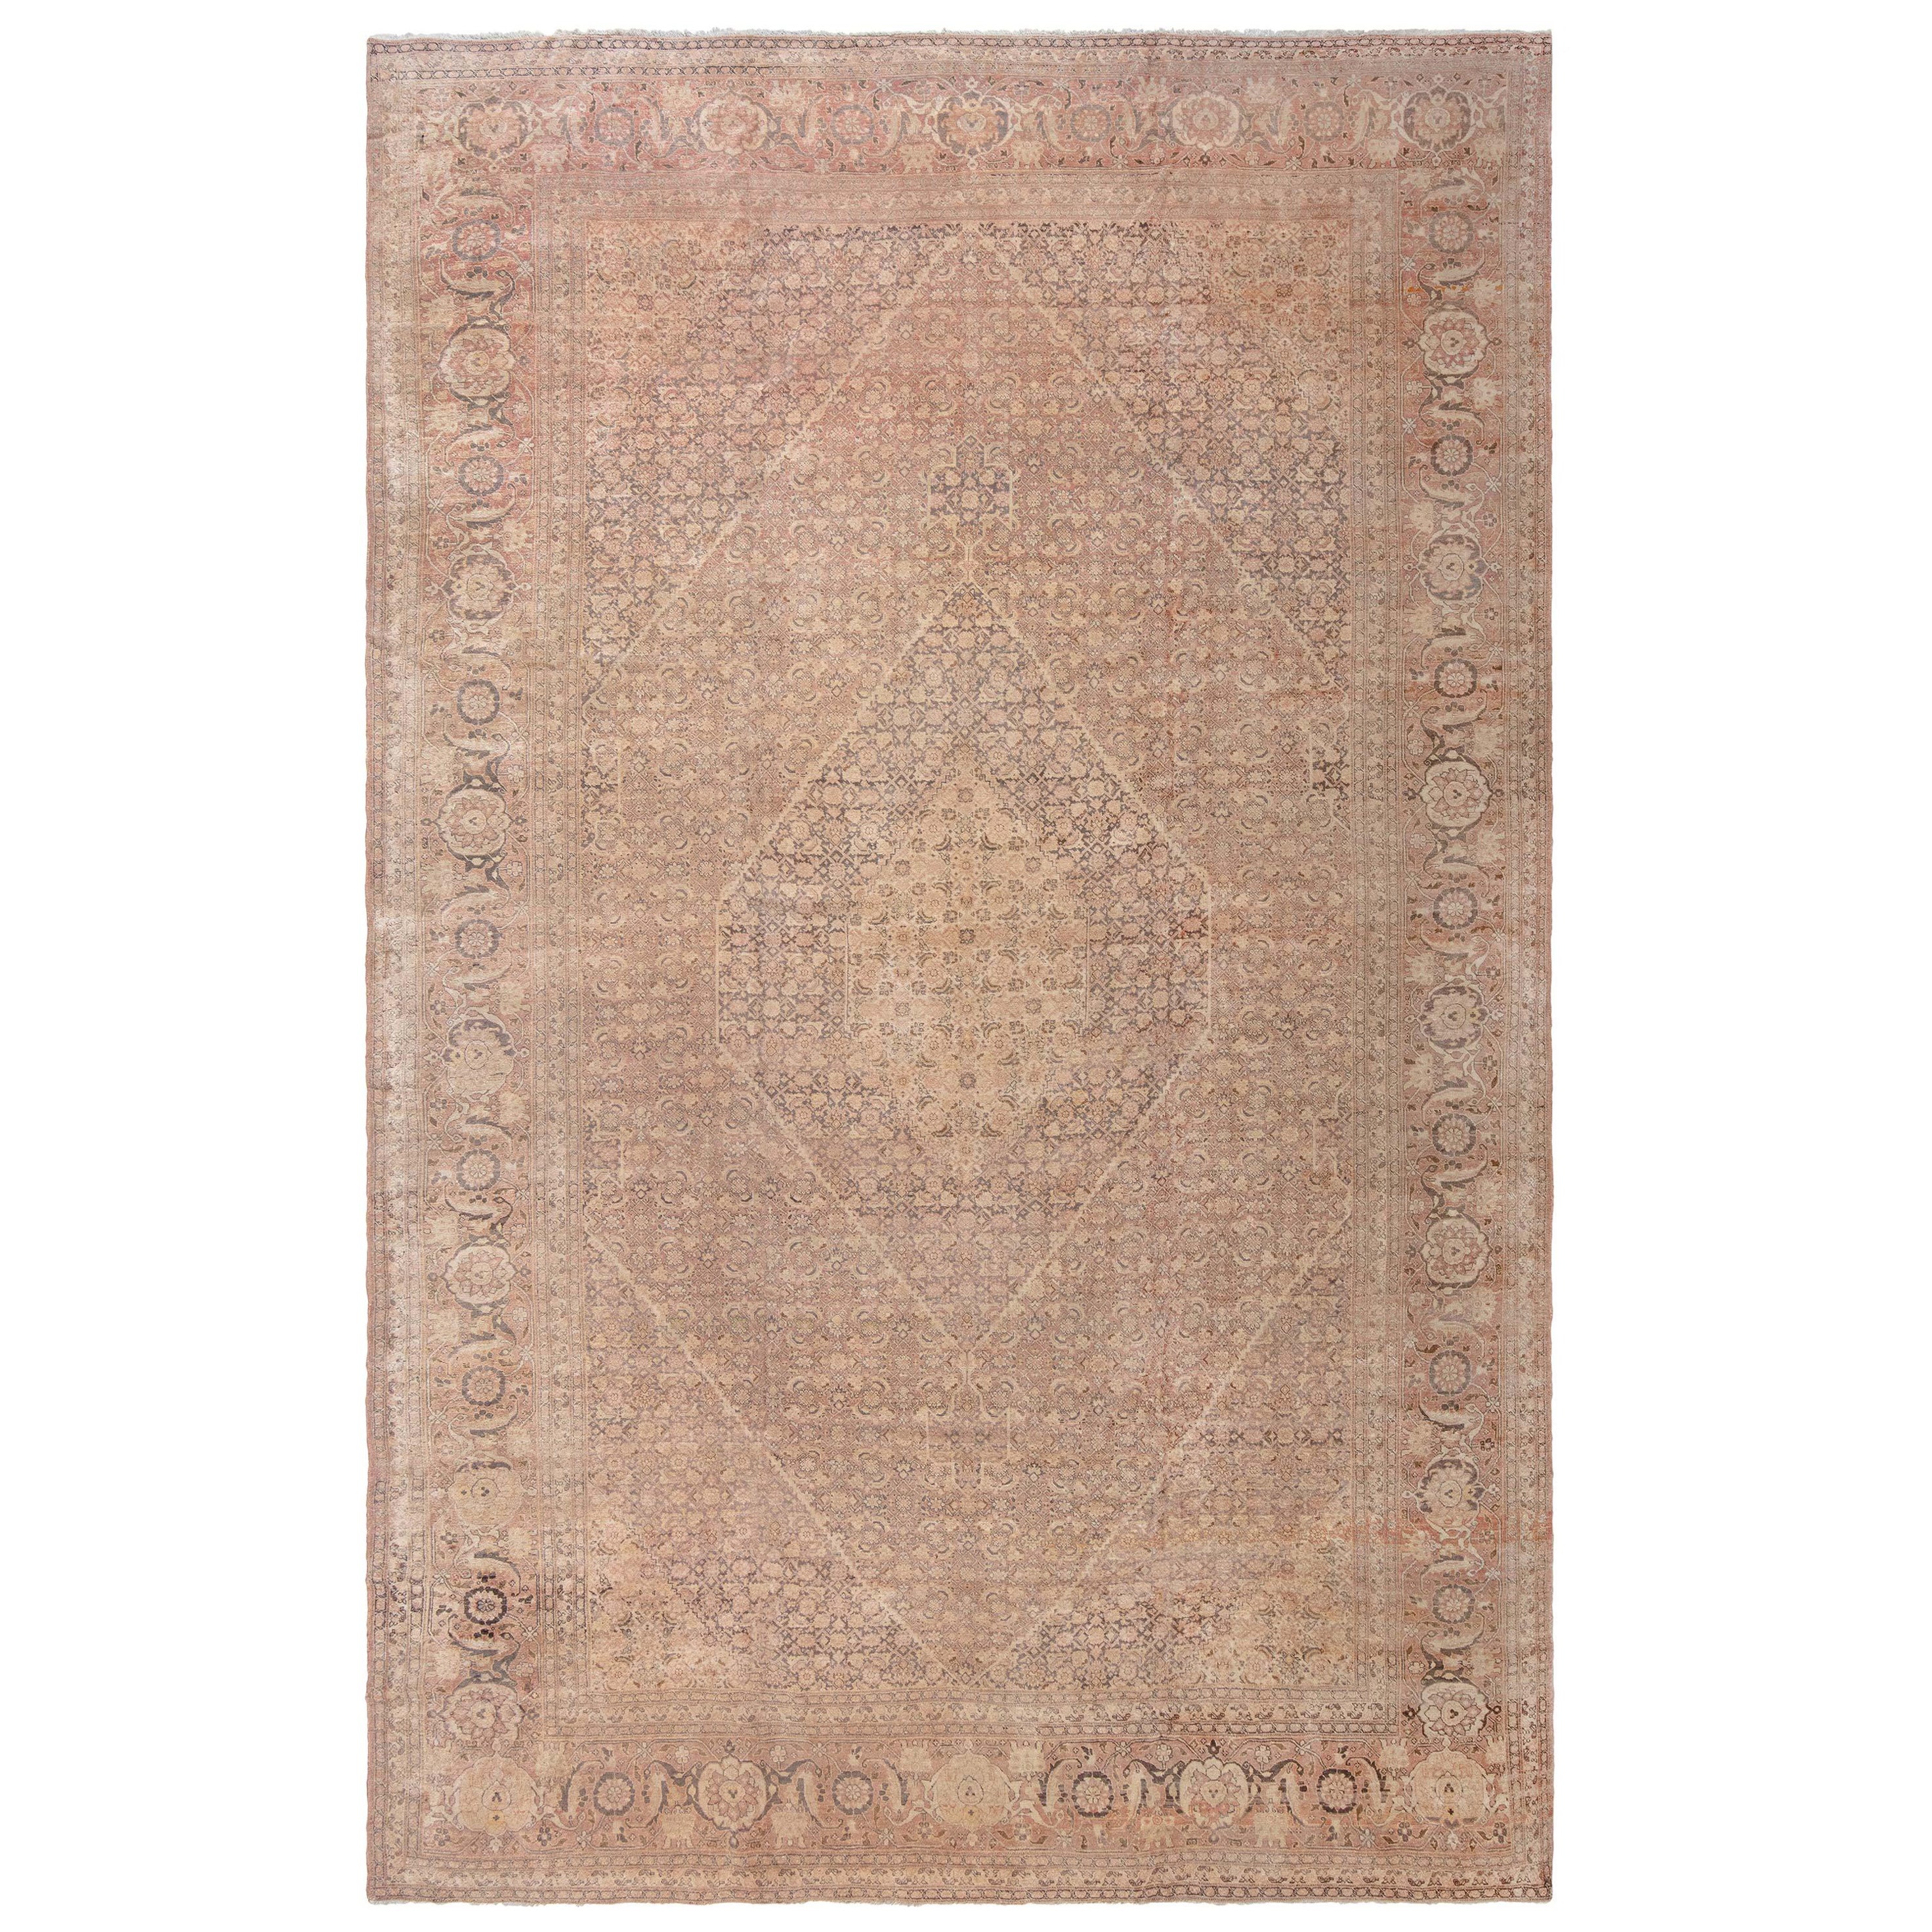 Antique Persian Tabriz Brown Handmade Wool Carpet For Sale